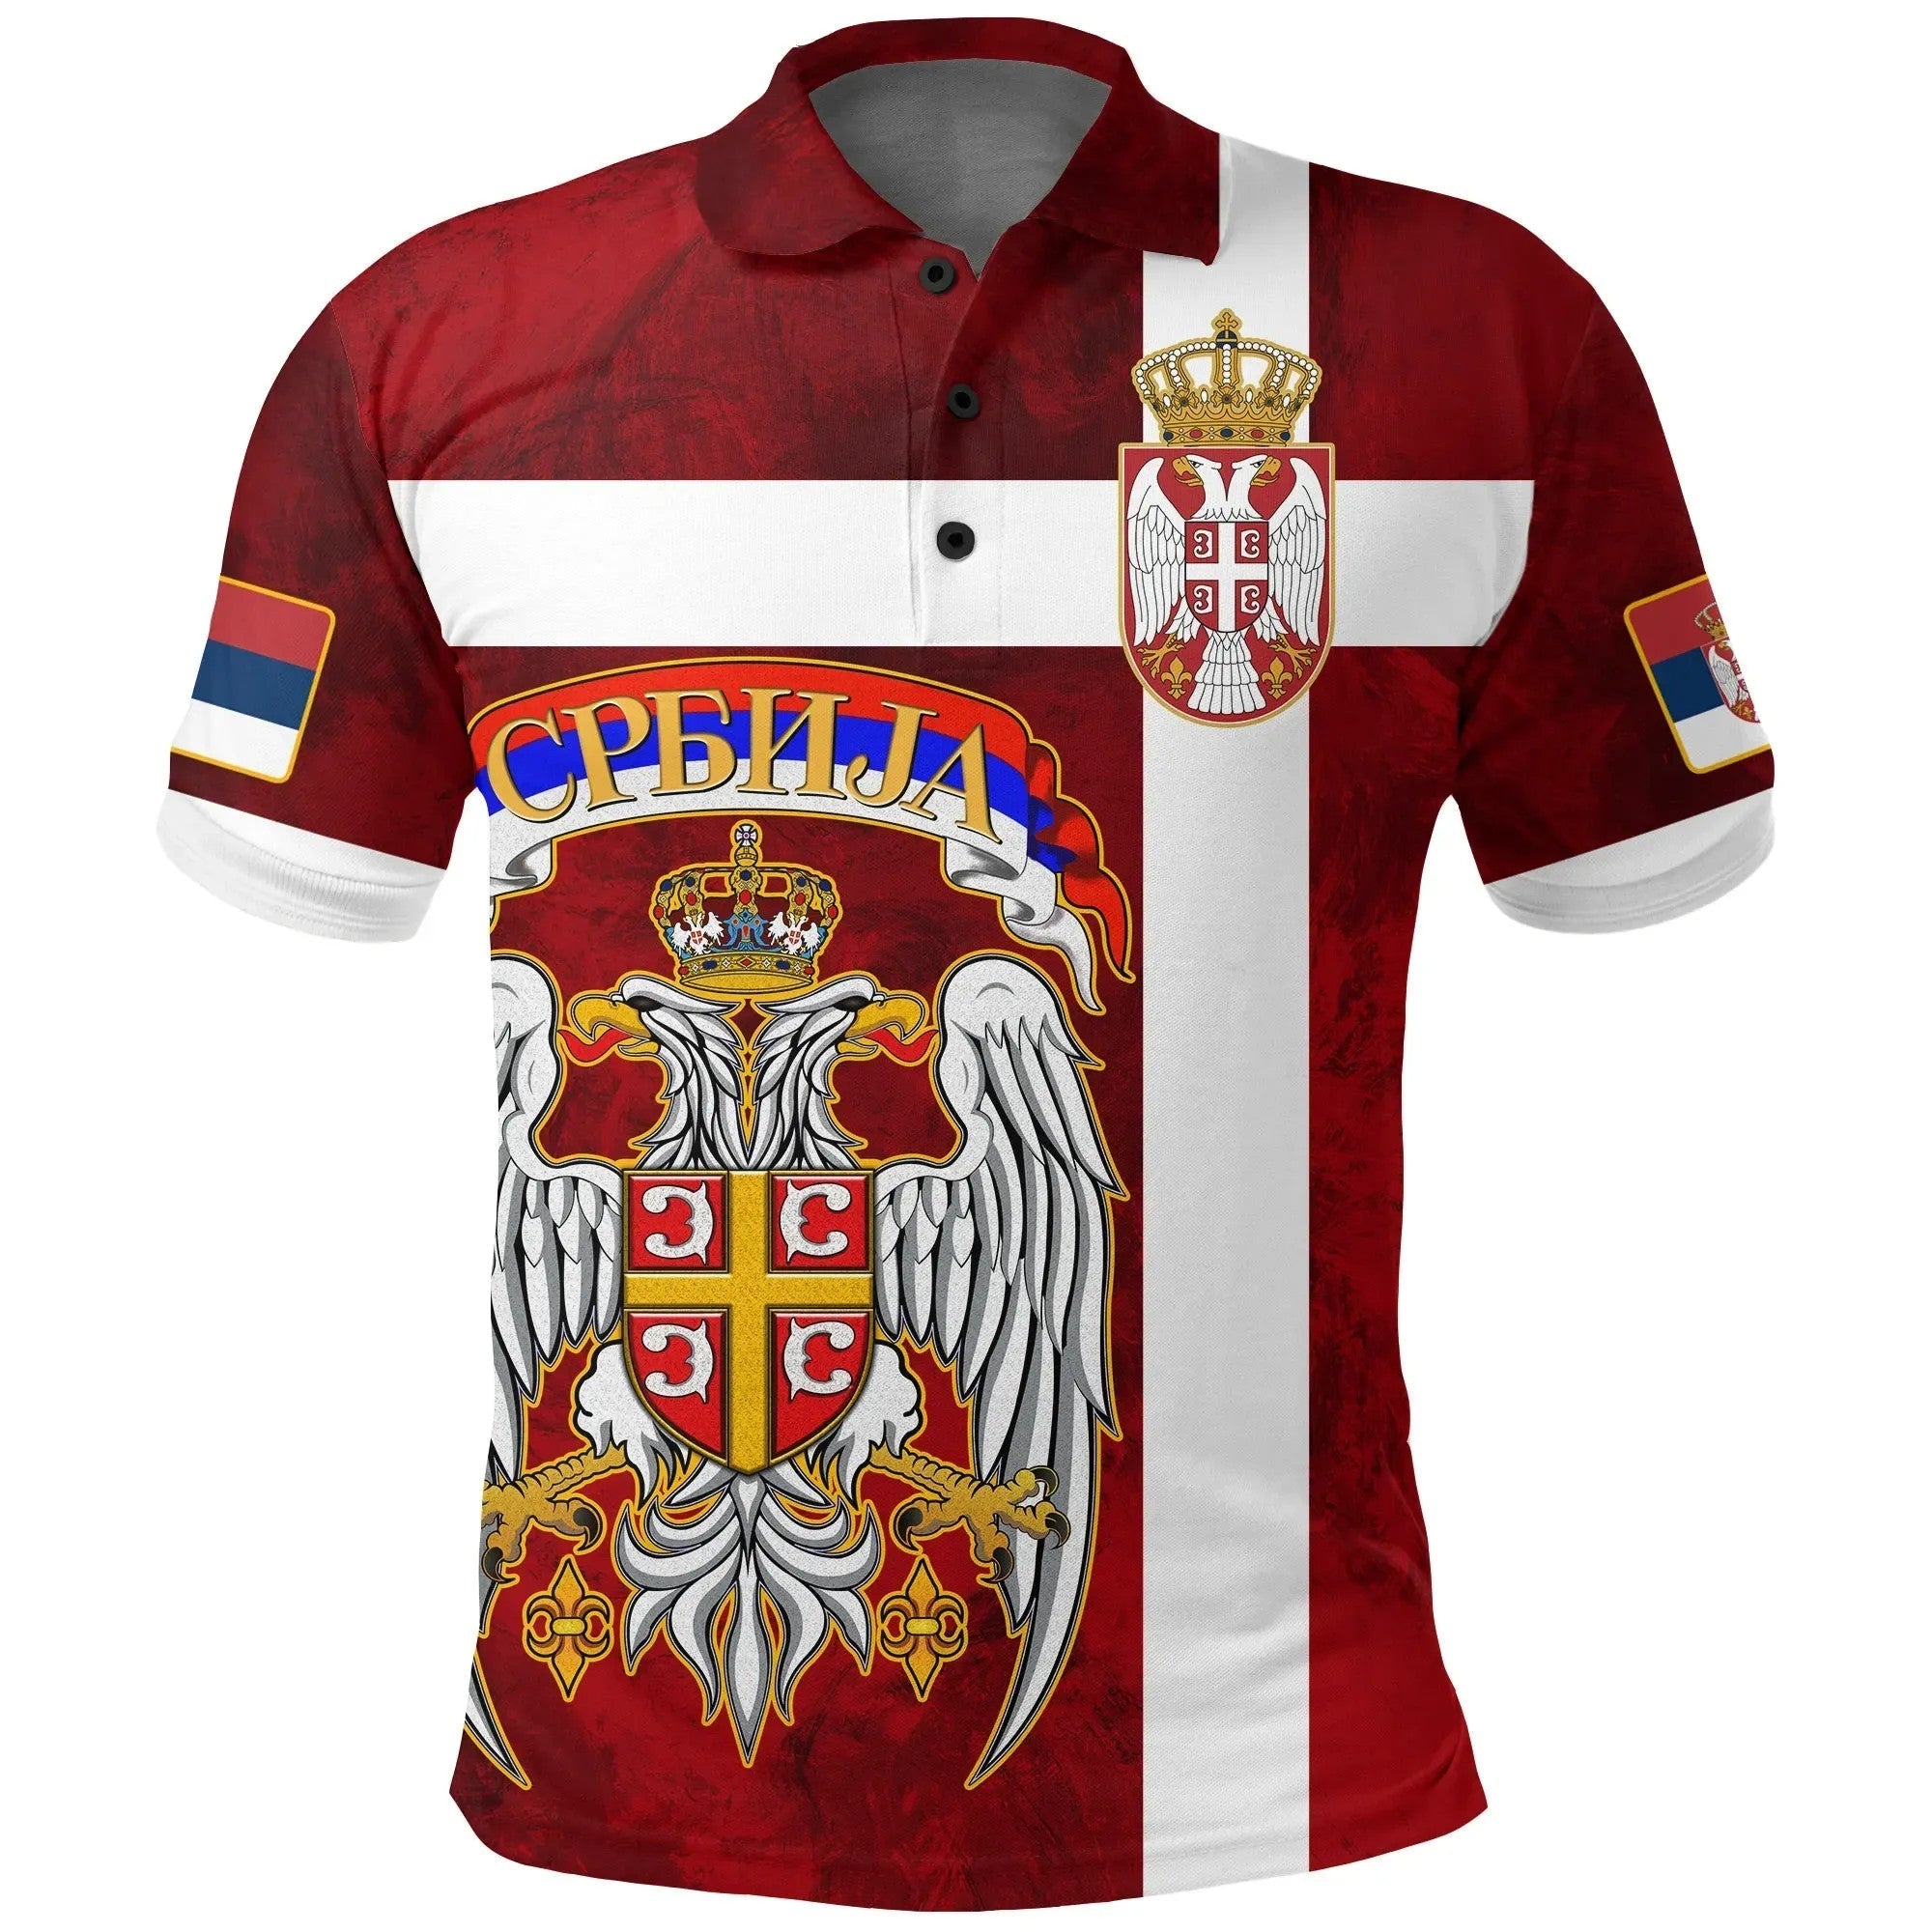 serbia-polo-shirt-best-serbian-eagle-tattoo